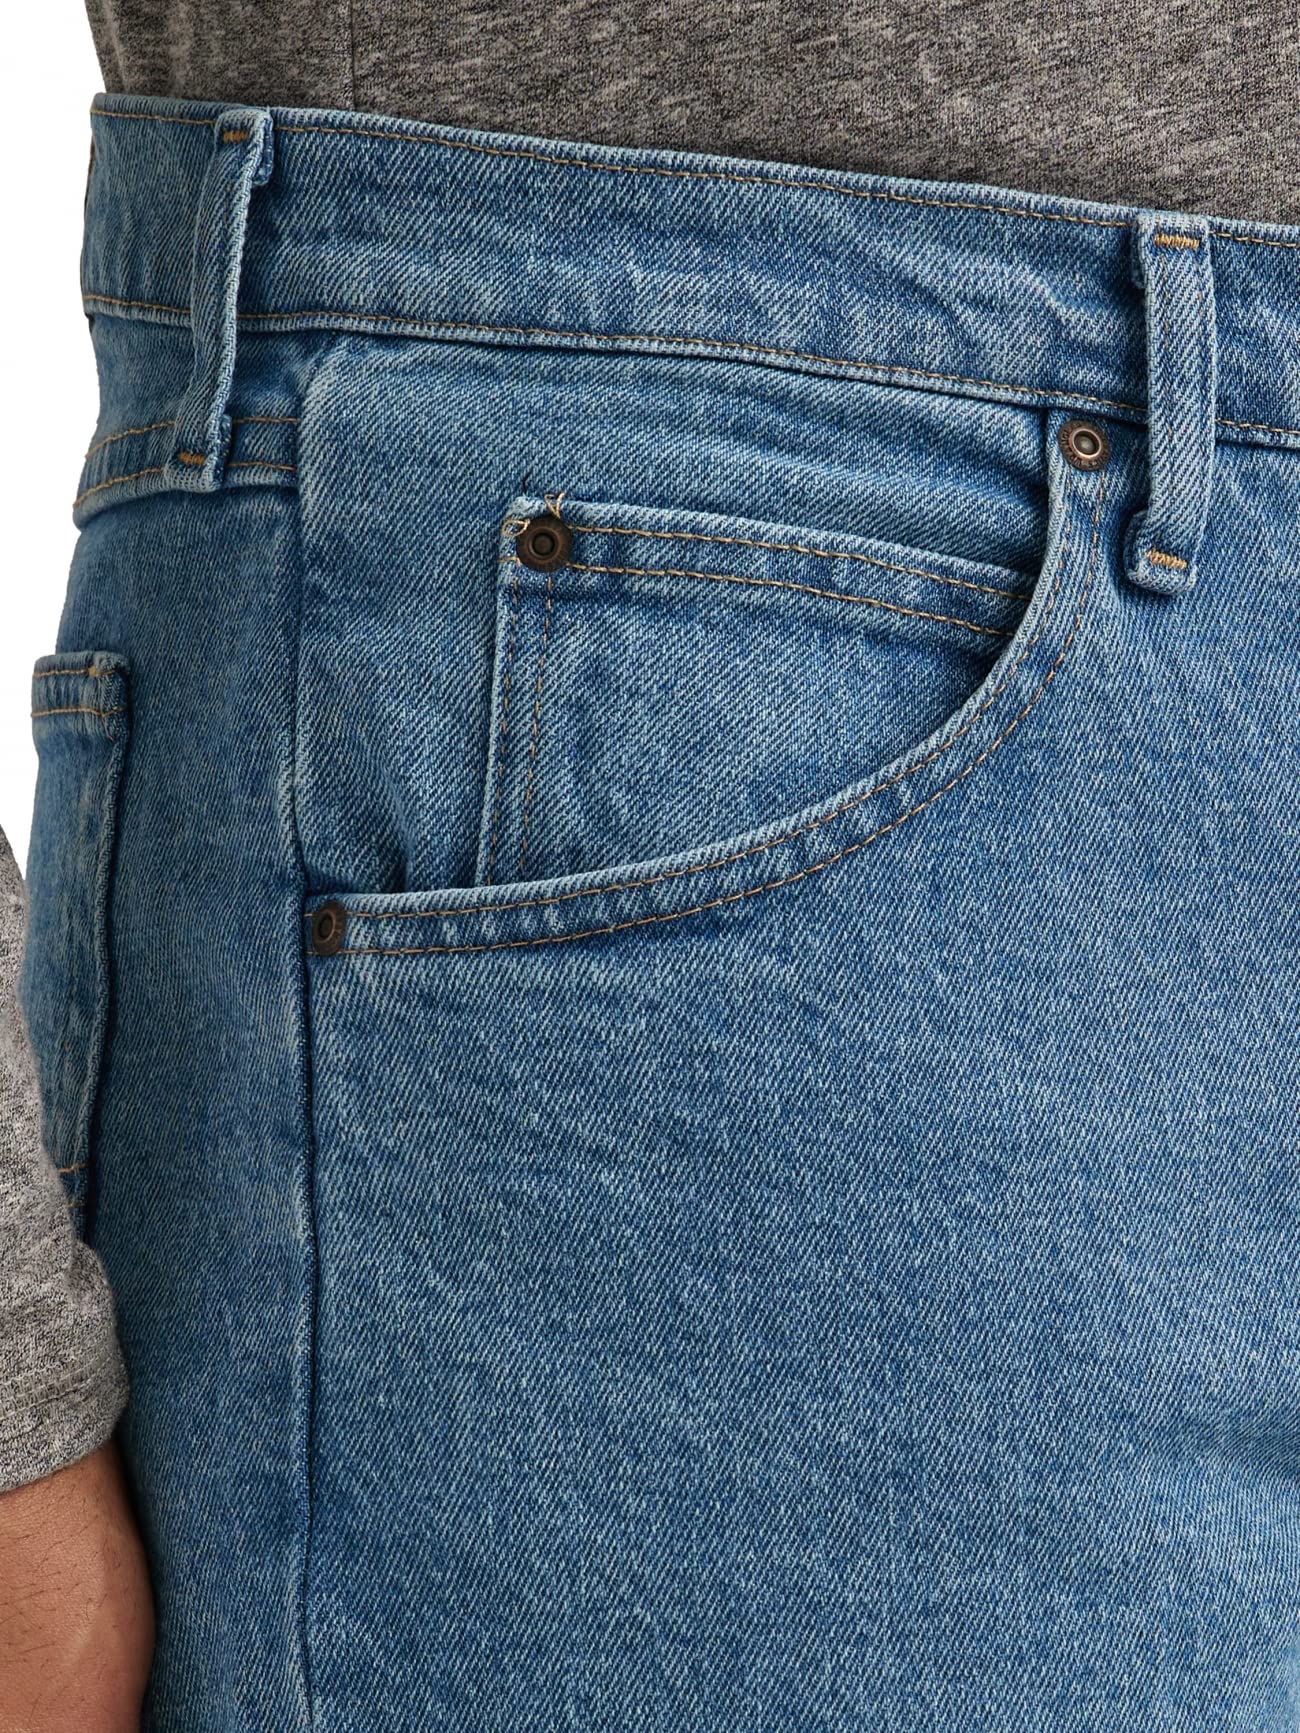 Wrangler Authentics Men's Classic 5-Pocket Relaxed Fit Jean, Light Stonewash Flex, 42W x 32L